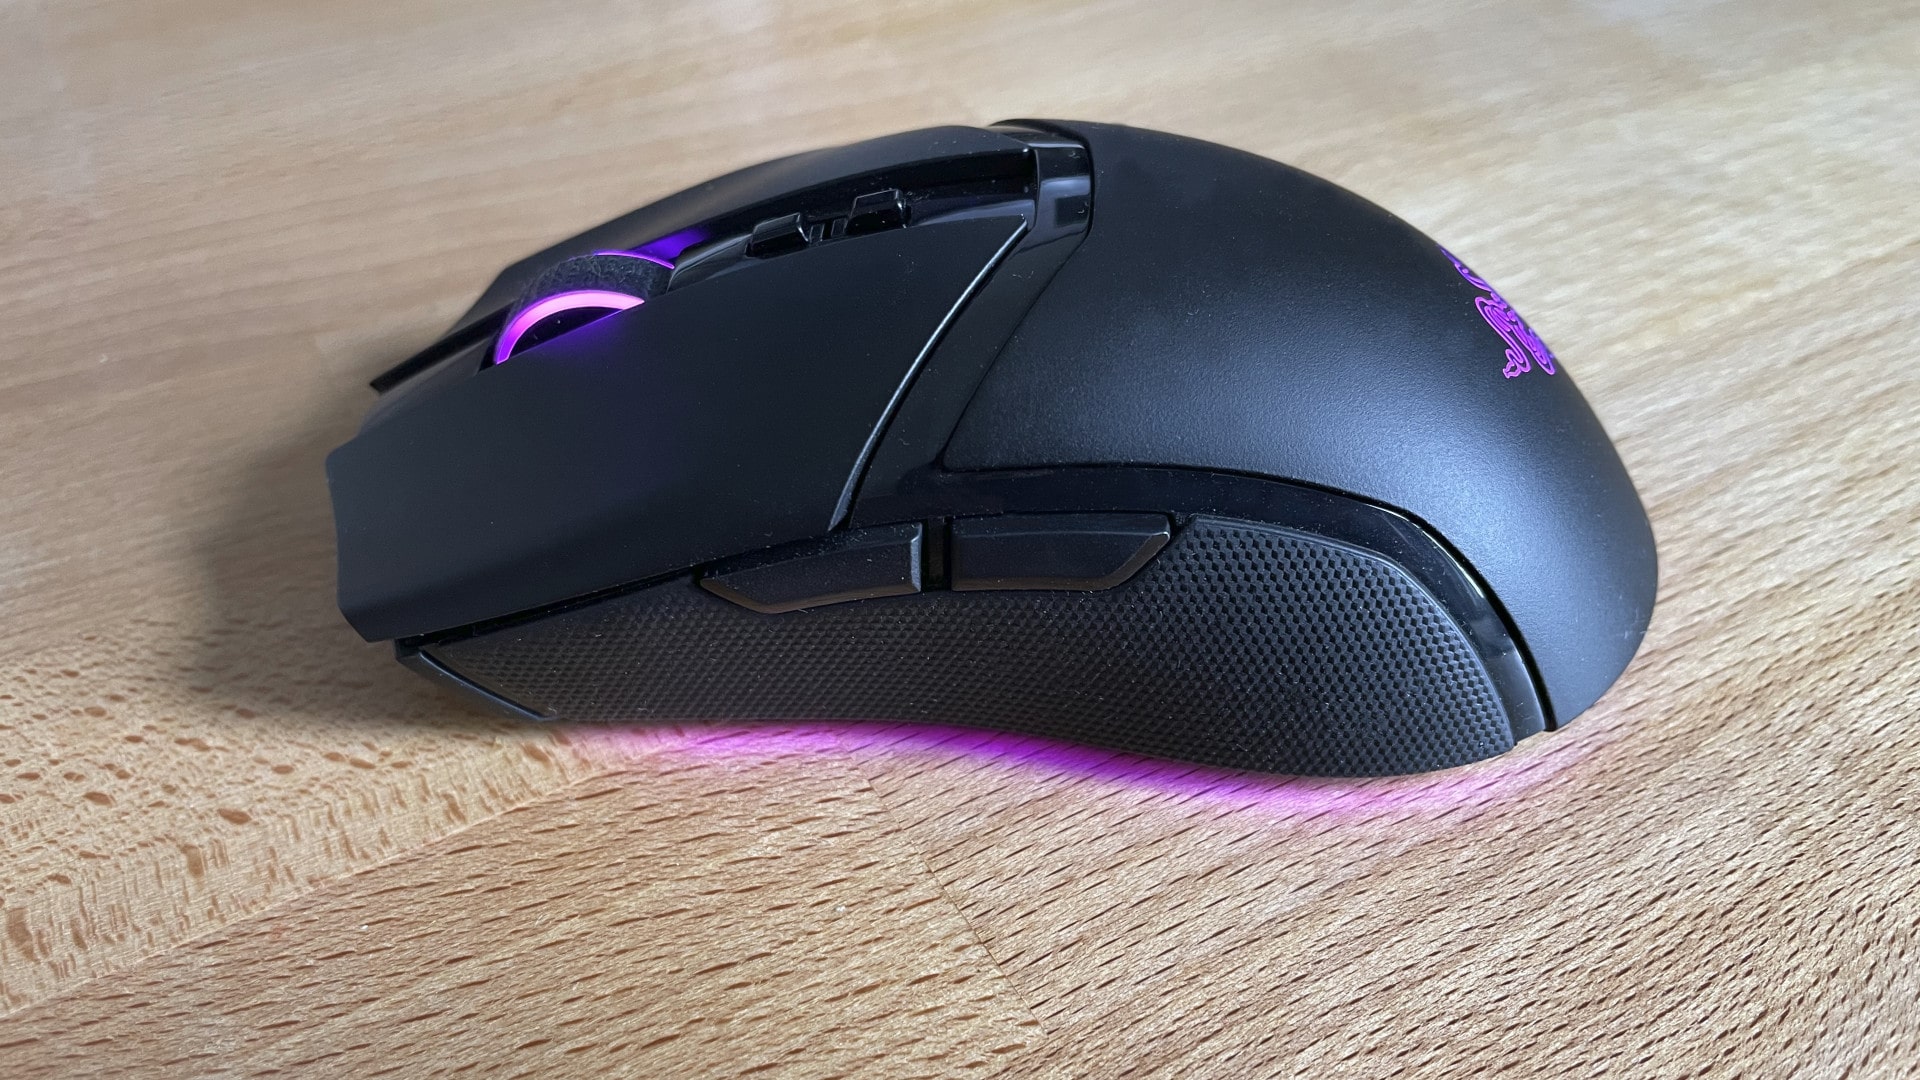 Razer Cobra Pro gaming mouse